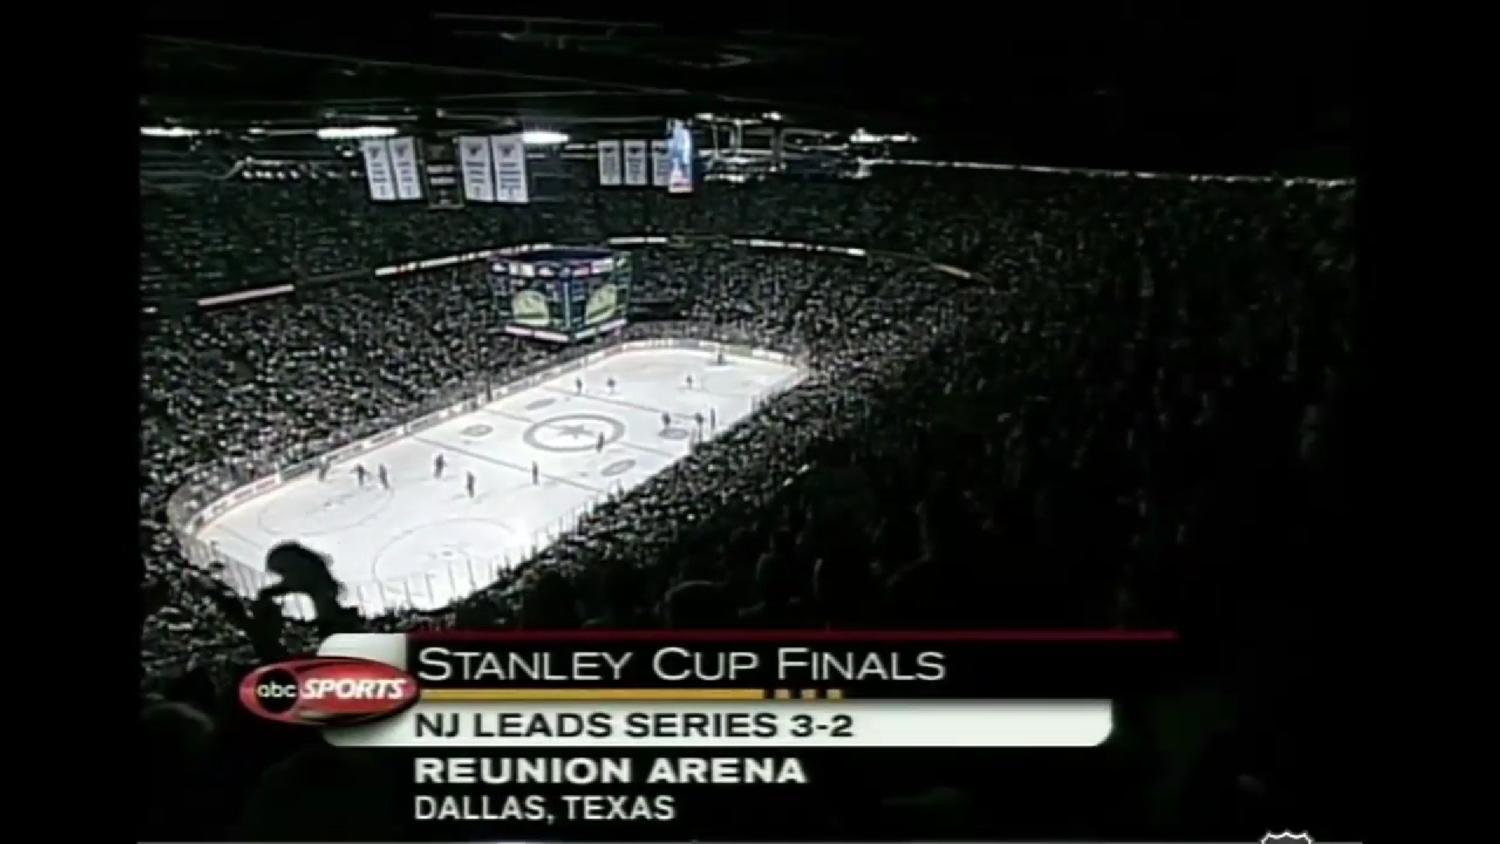 НХЛ 1999/2000. Финал. Нью-Джерси - Даллас. Игра 6